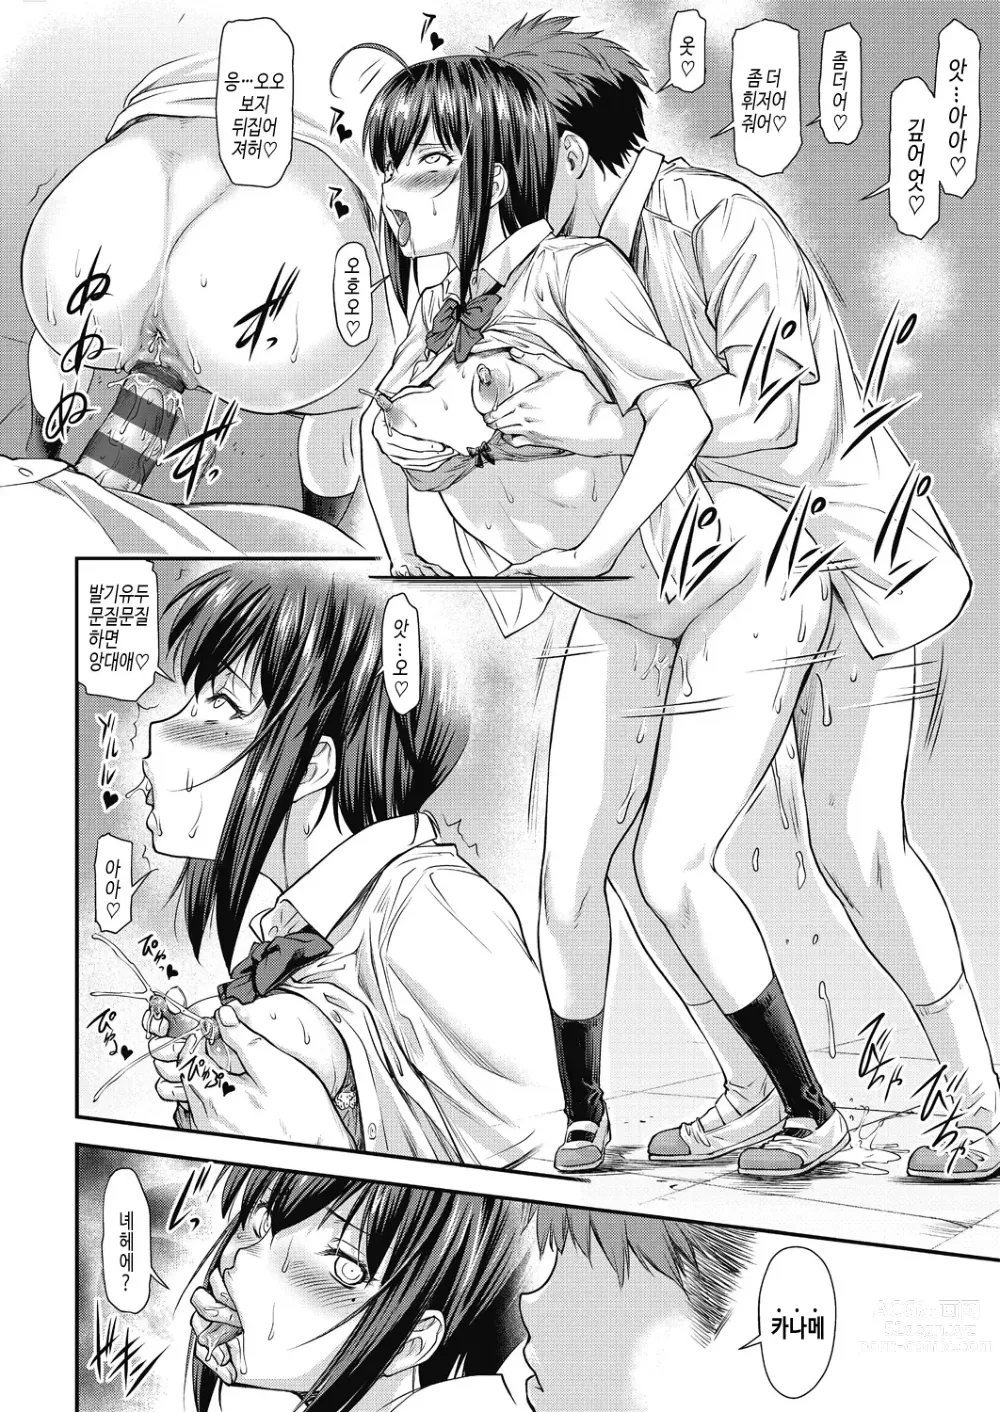 Page 26 of manga Kaname Date Chuu